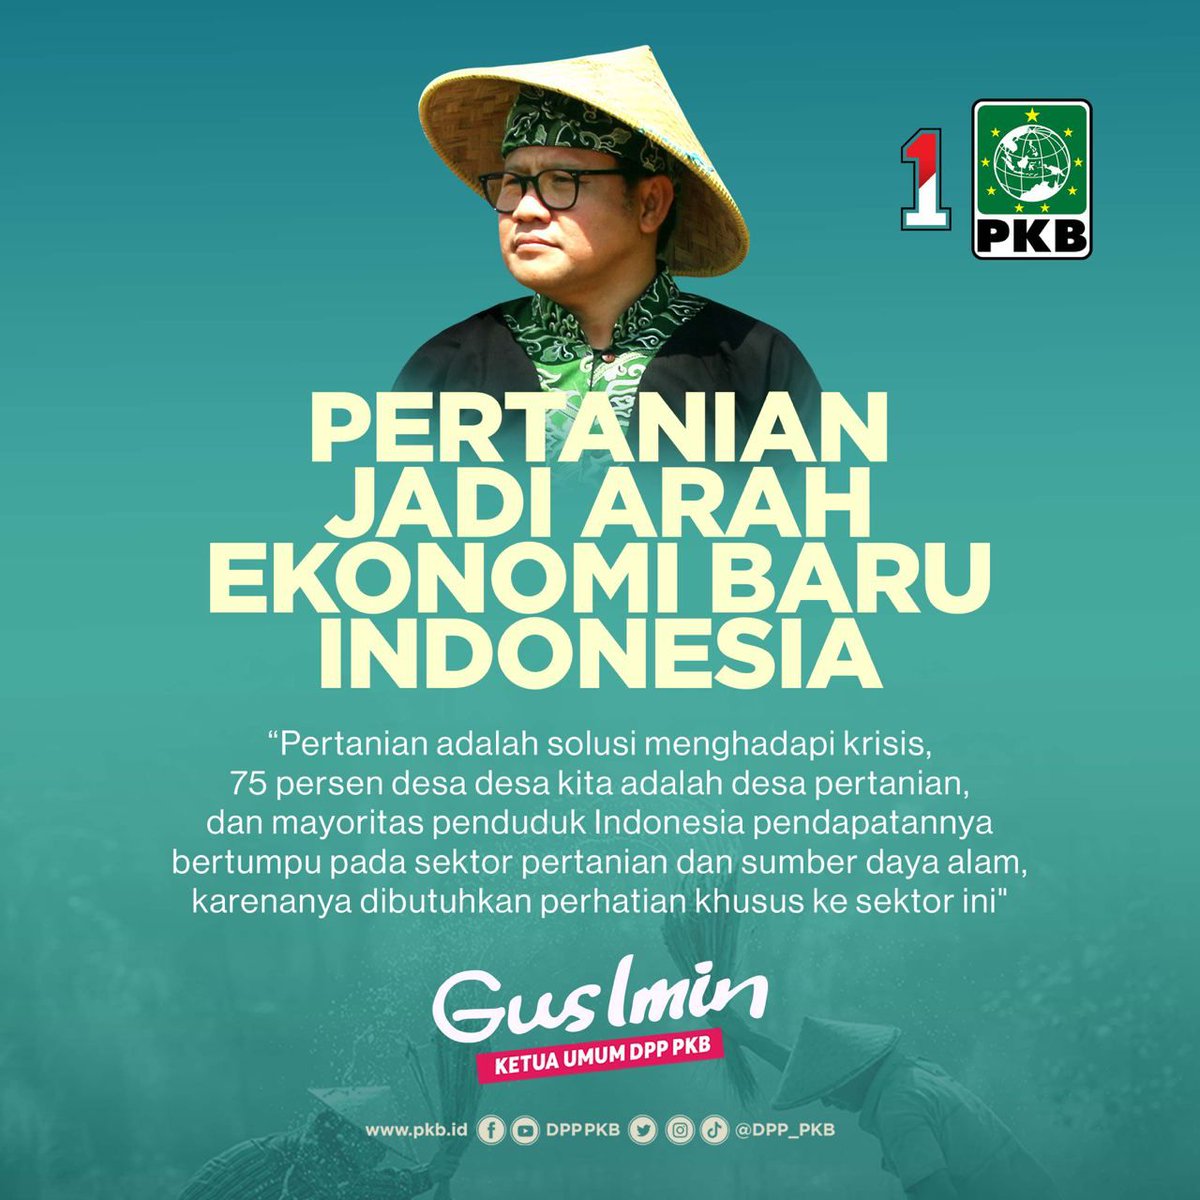 #GusMuhaimin
#PKBBelaPetani
Pertanian adalah solusi menghadapi krisis.